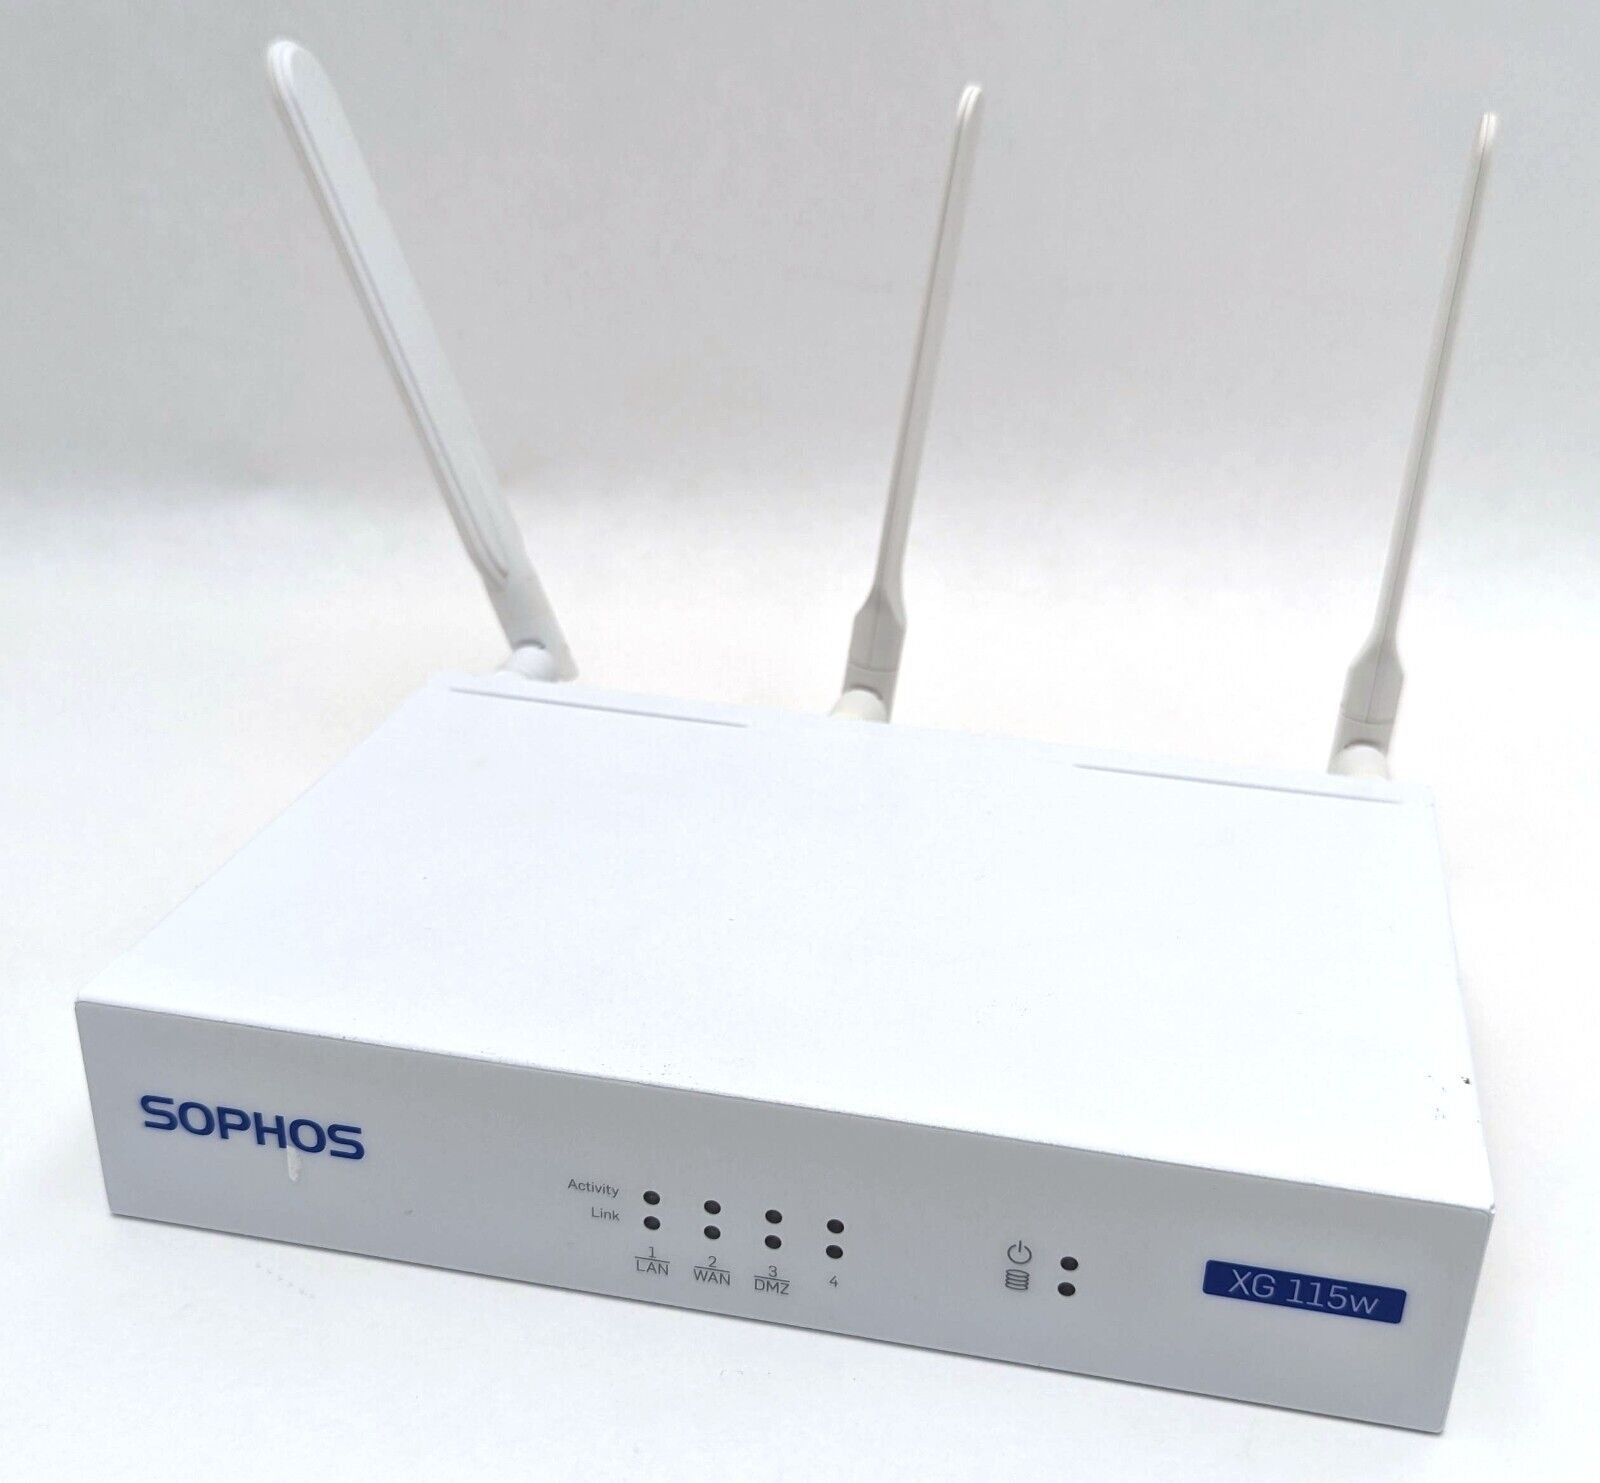 Sophos XG 115w Rev. 2 Firewall Desktop Network Security Appliance w/ Antennas